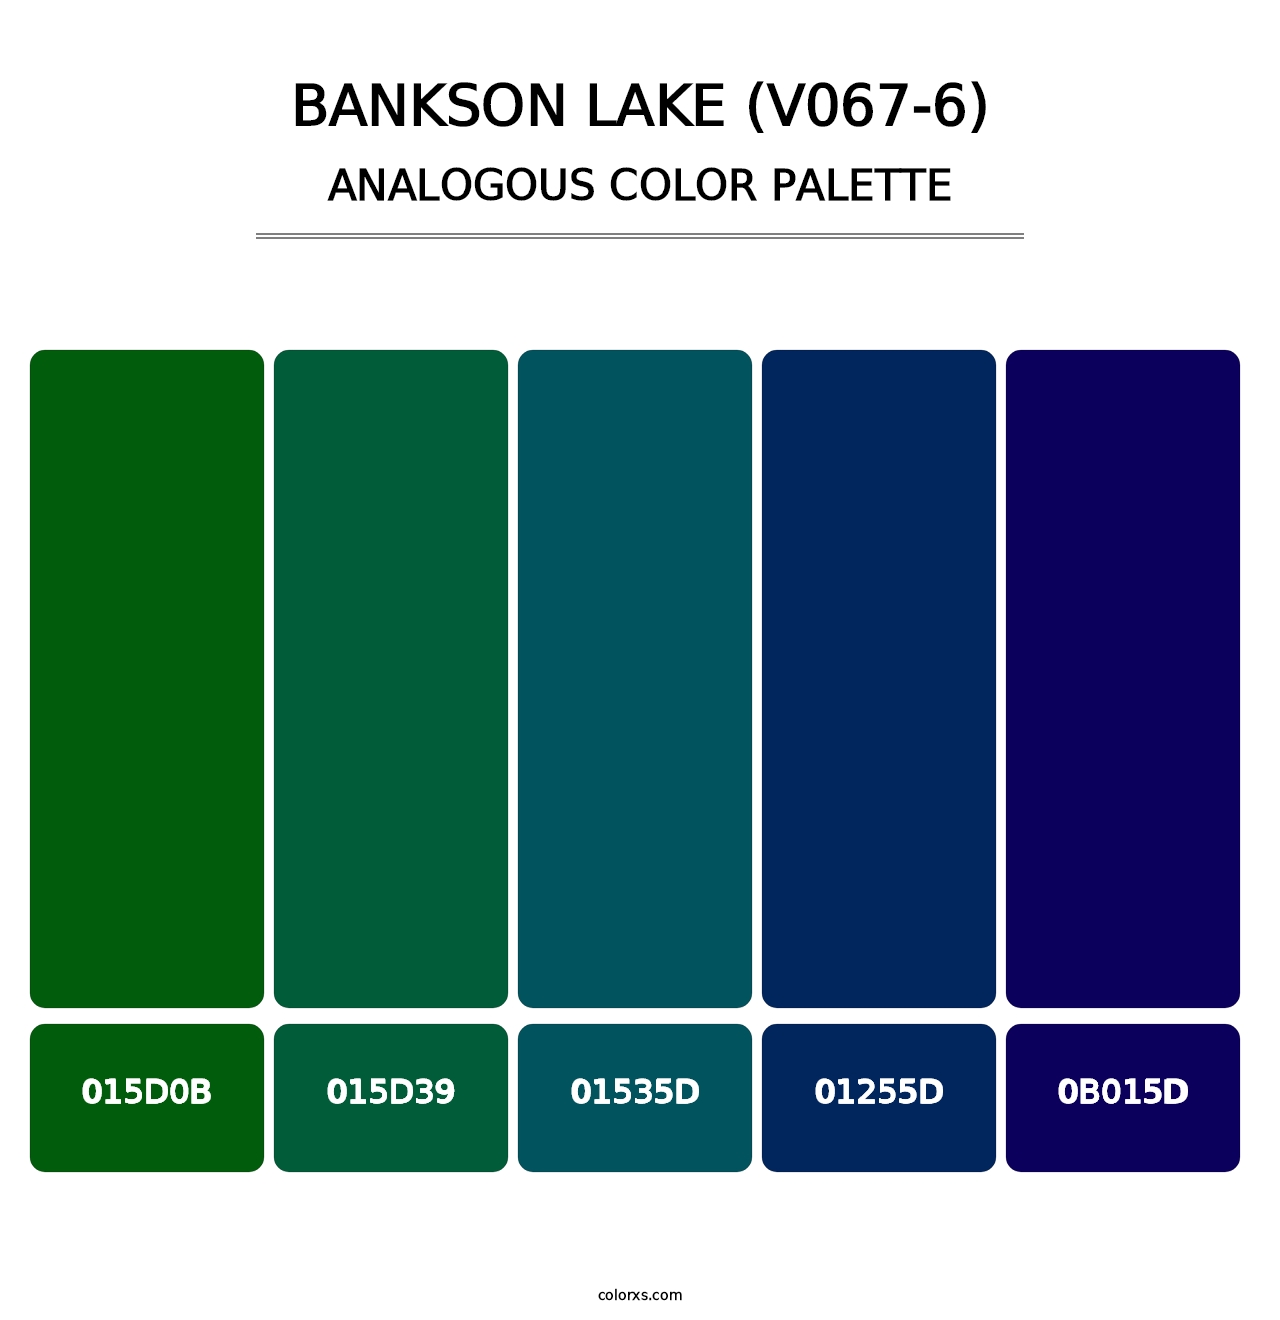 Bankson Lake (V067-6) - Analogous Color Palette